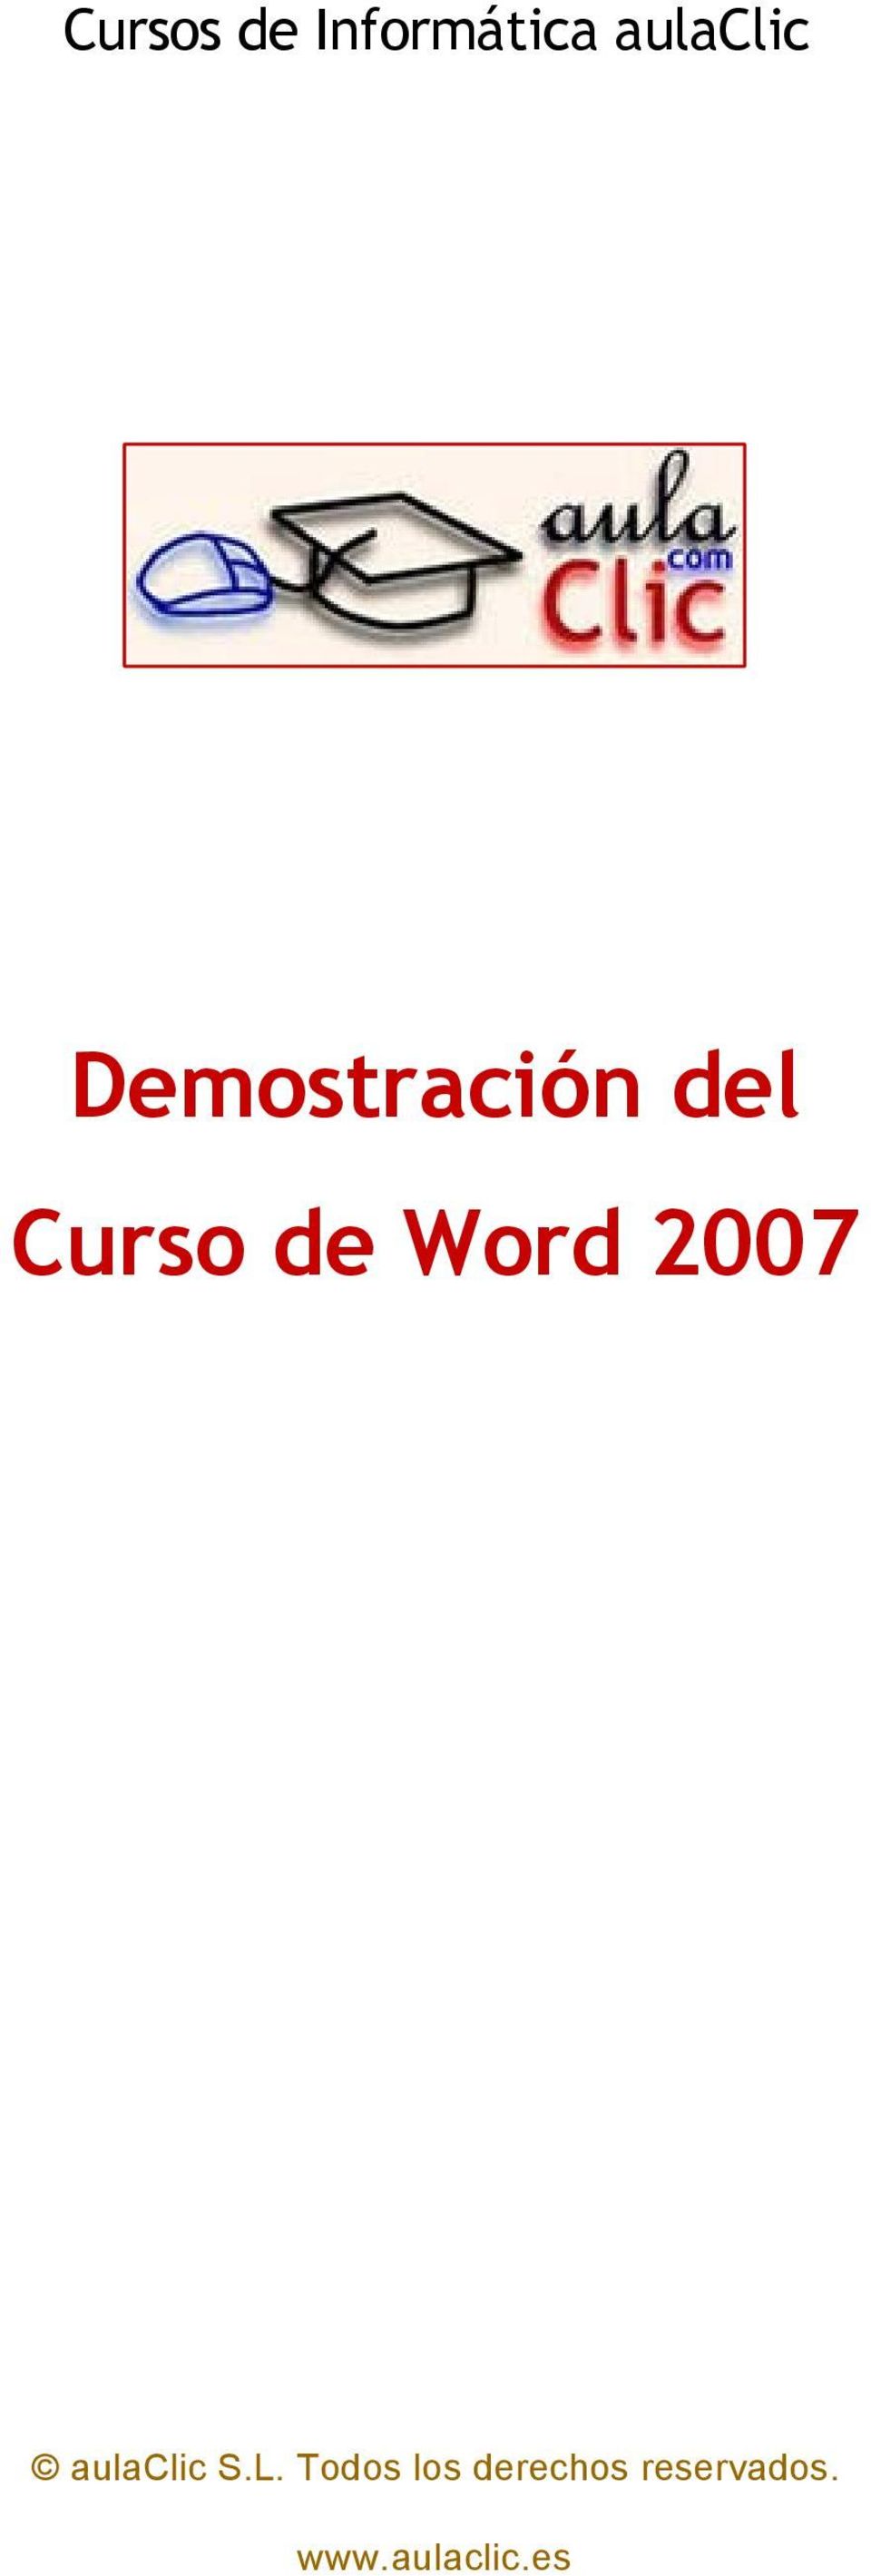 2007 aulaclic S.L.